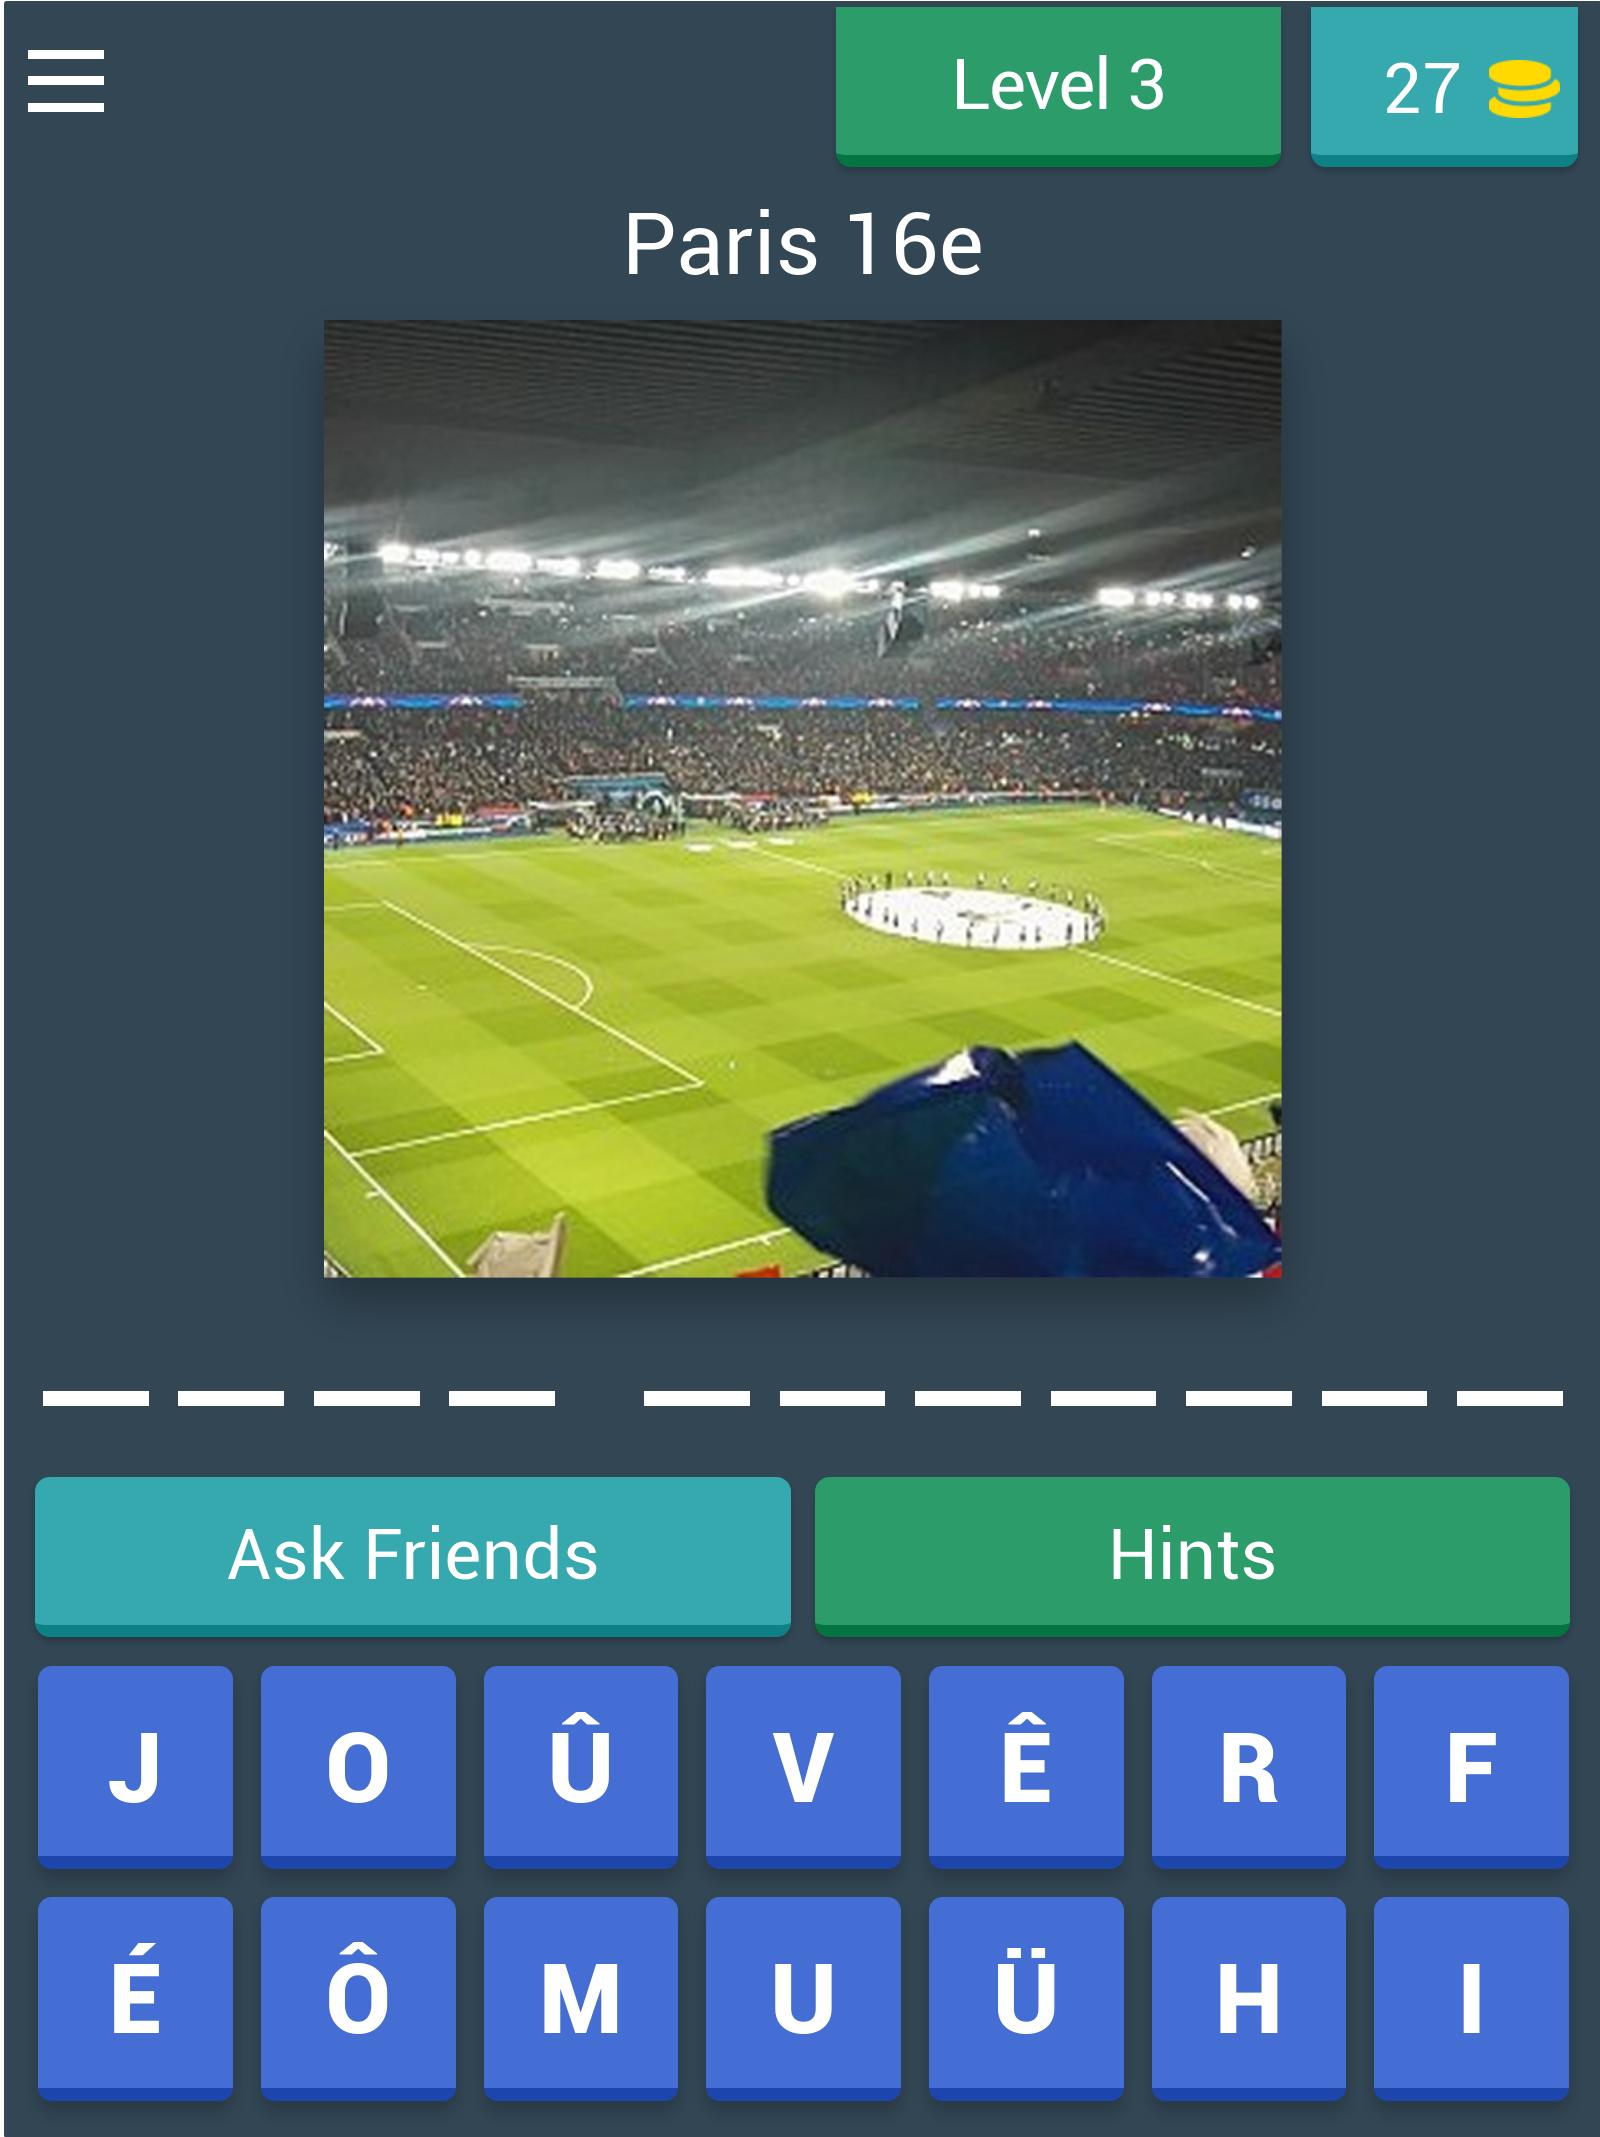 Stade En France Quiz Football Rugby Athletisme For Android Apk Download